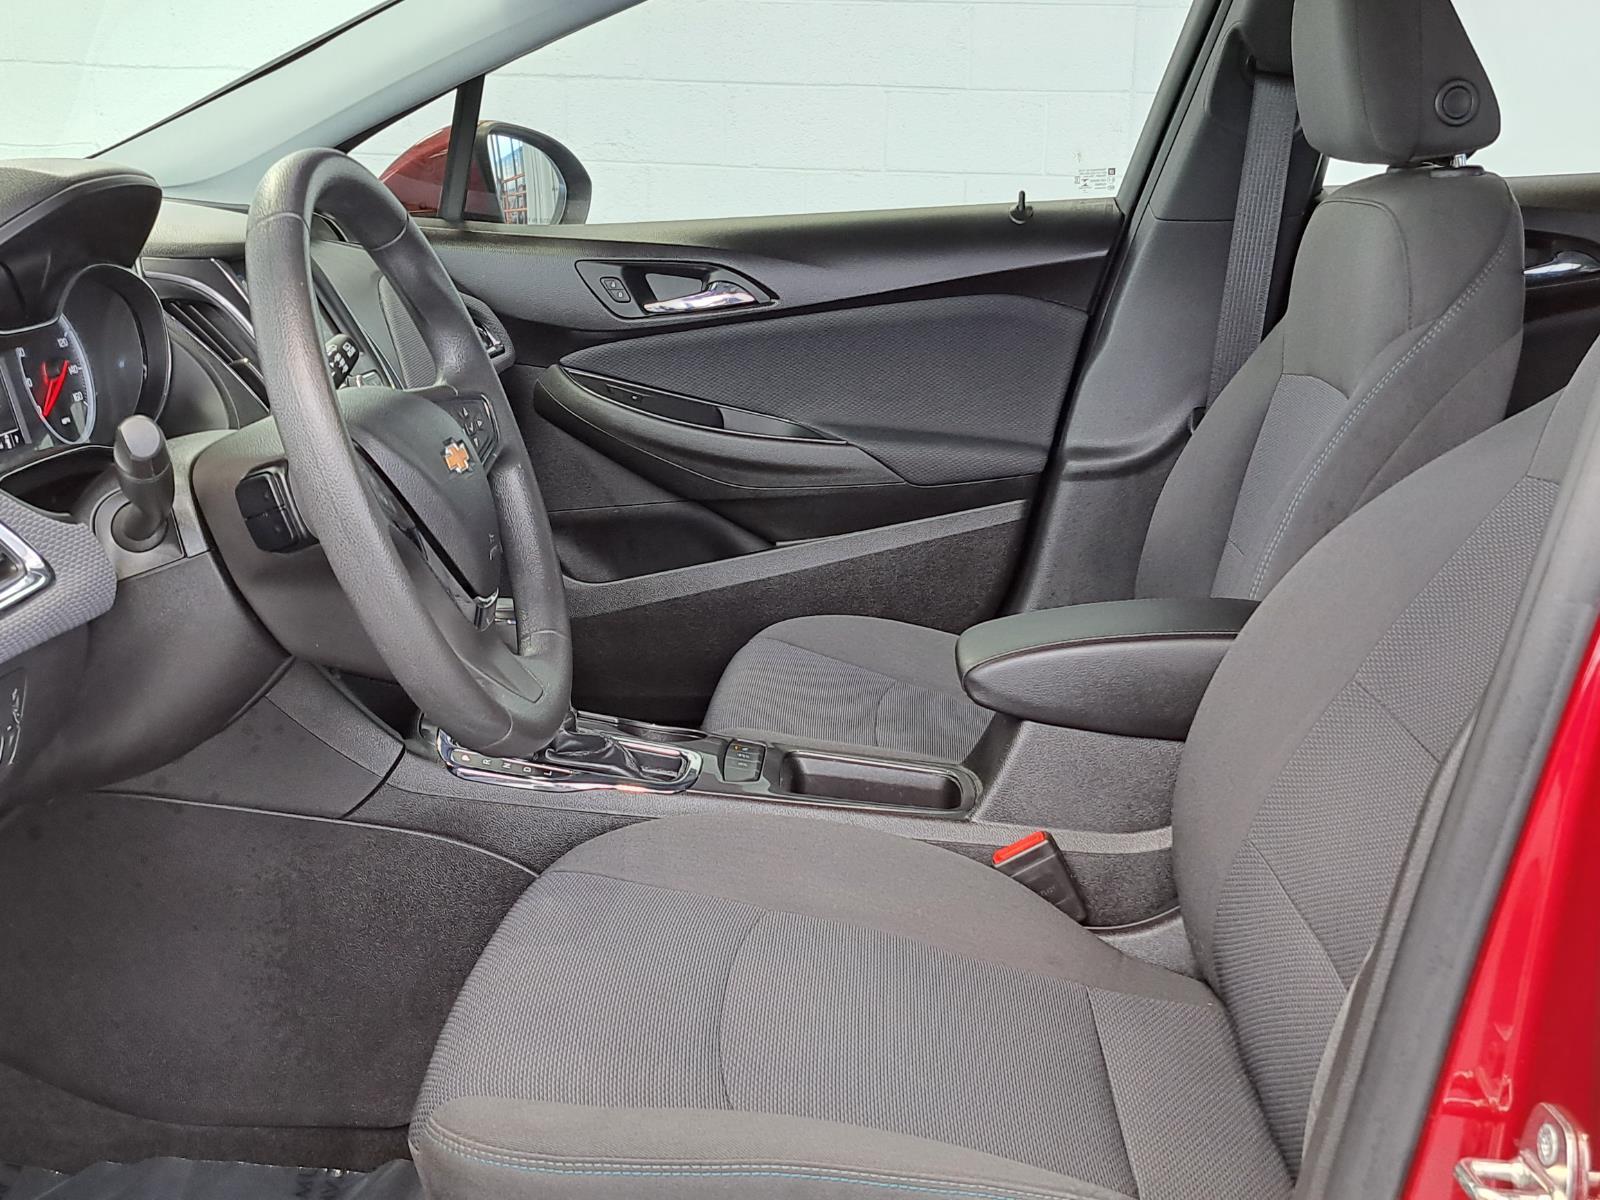 2019 Chevrolet Cruze LT Hatchback 4 Dr. Front Wheel Drive mobile thumbnail 27